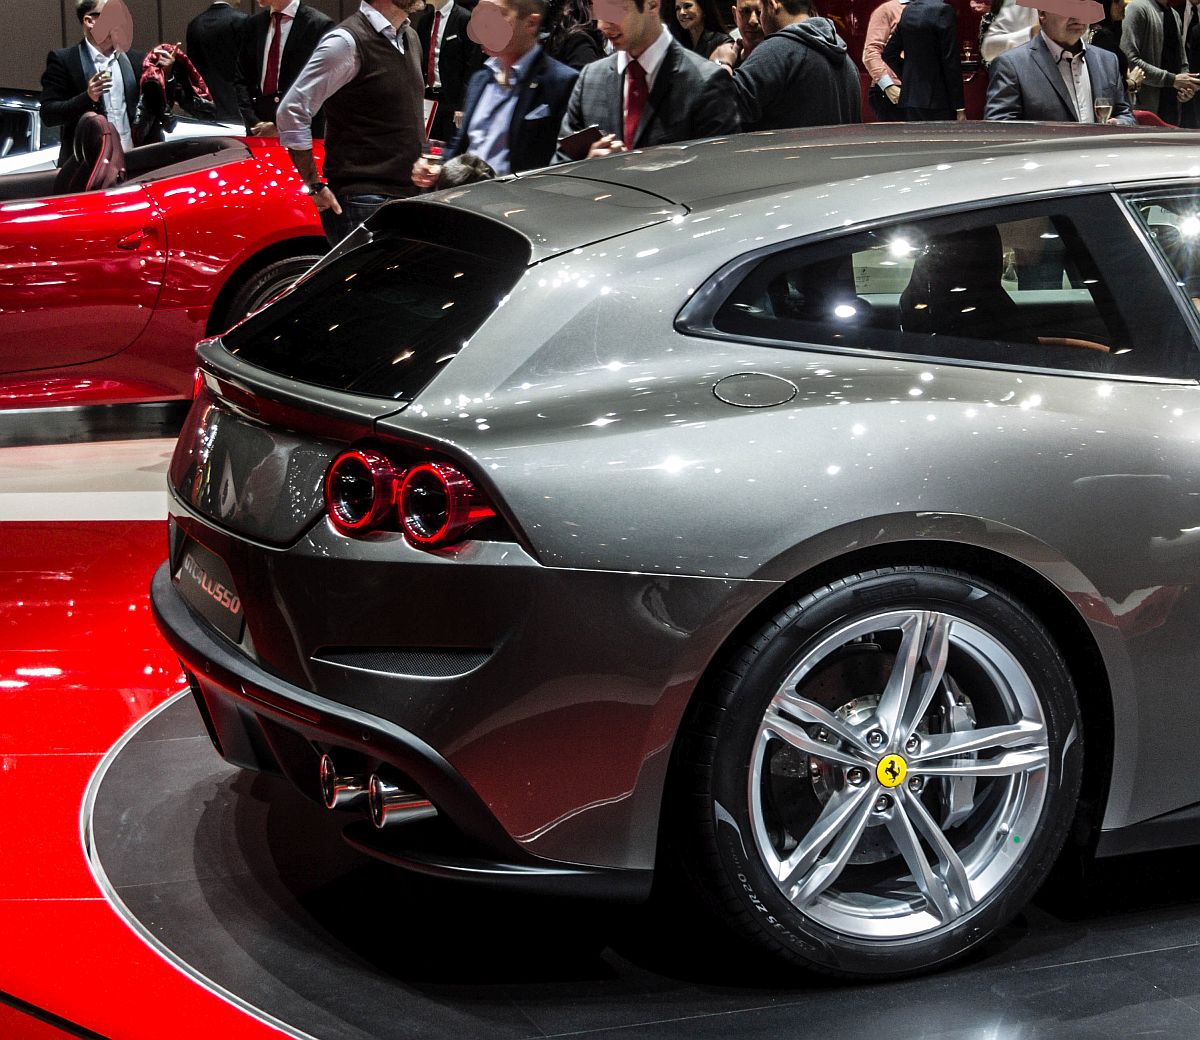 Detailaufnahme eines Ferrari GTC4Lusso (FF Nachfolgemodell). Fiti: 04.03.2016.